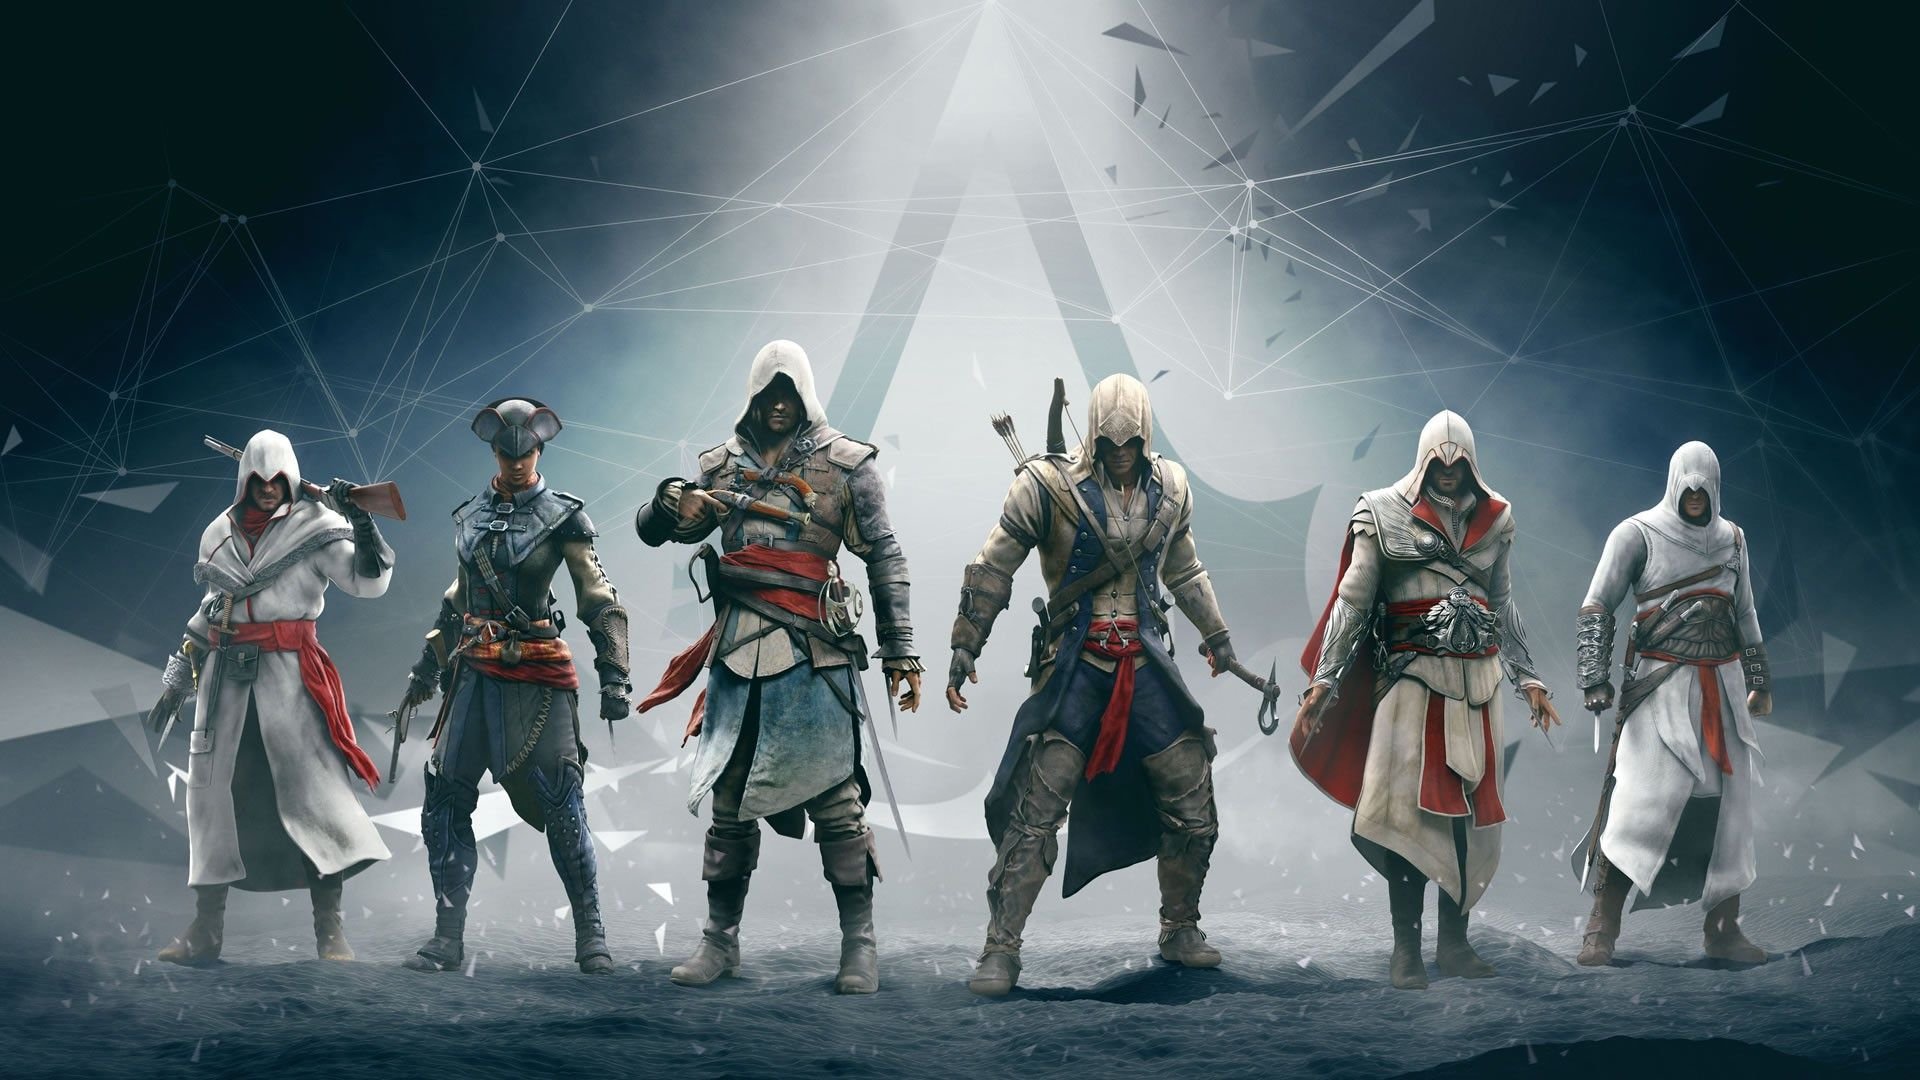 assassins, Creed, Unity, Fantasy, Action, Adventure, Fighting, Warrior Wallpaper